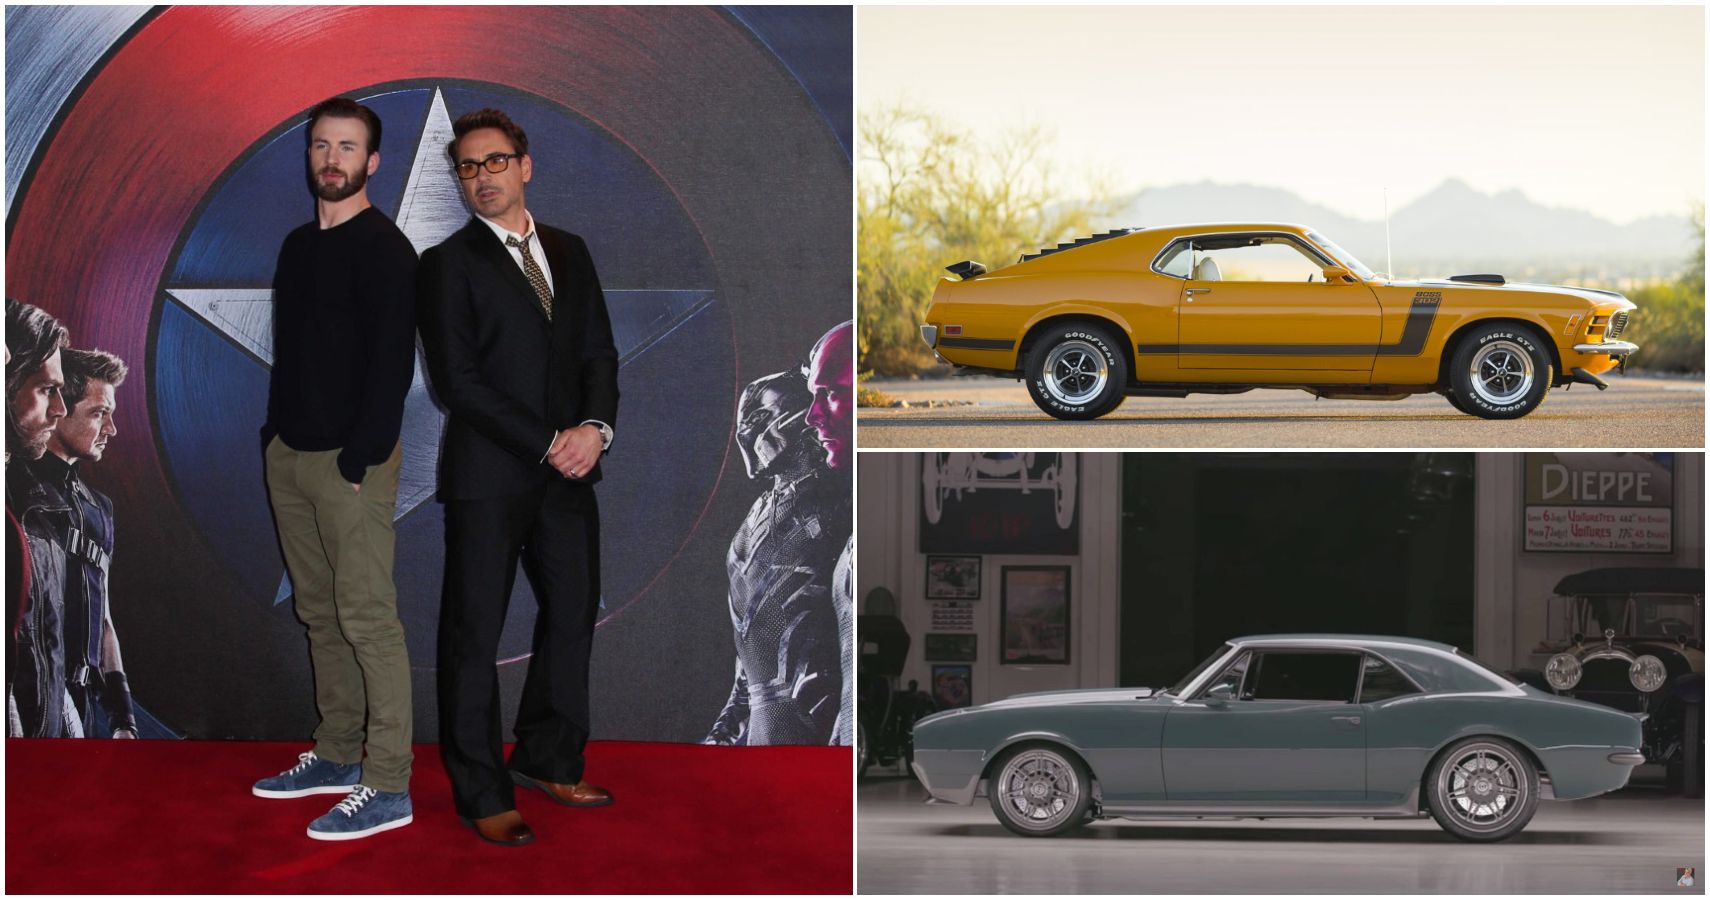 Chris Evans And Robert Downey Jr.'s Cars